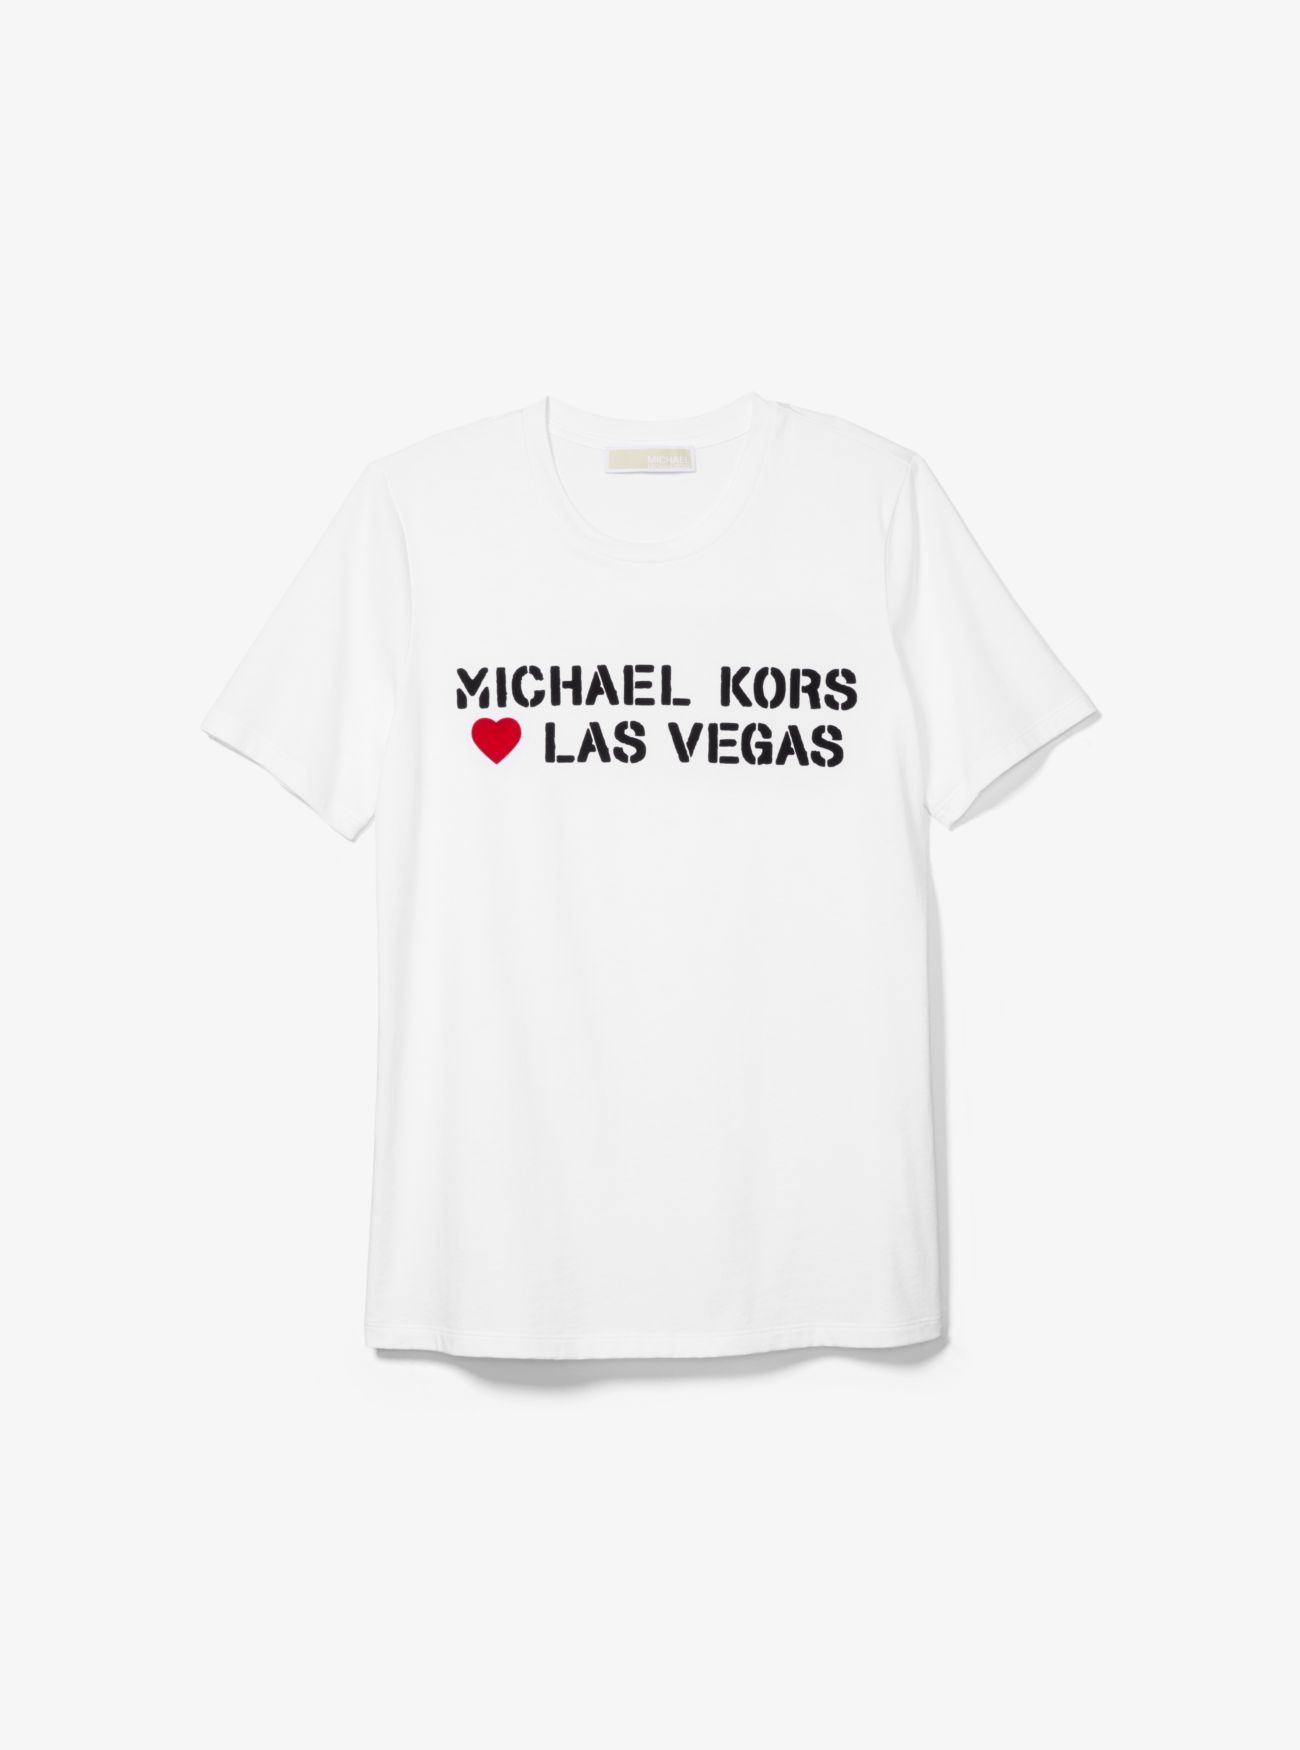 Футболка унисекс из хлопкового джерси MK Loves Las Vegas Michael Kors